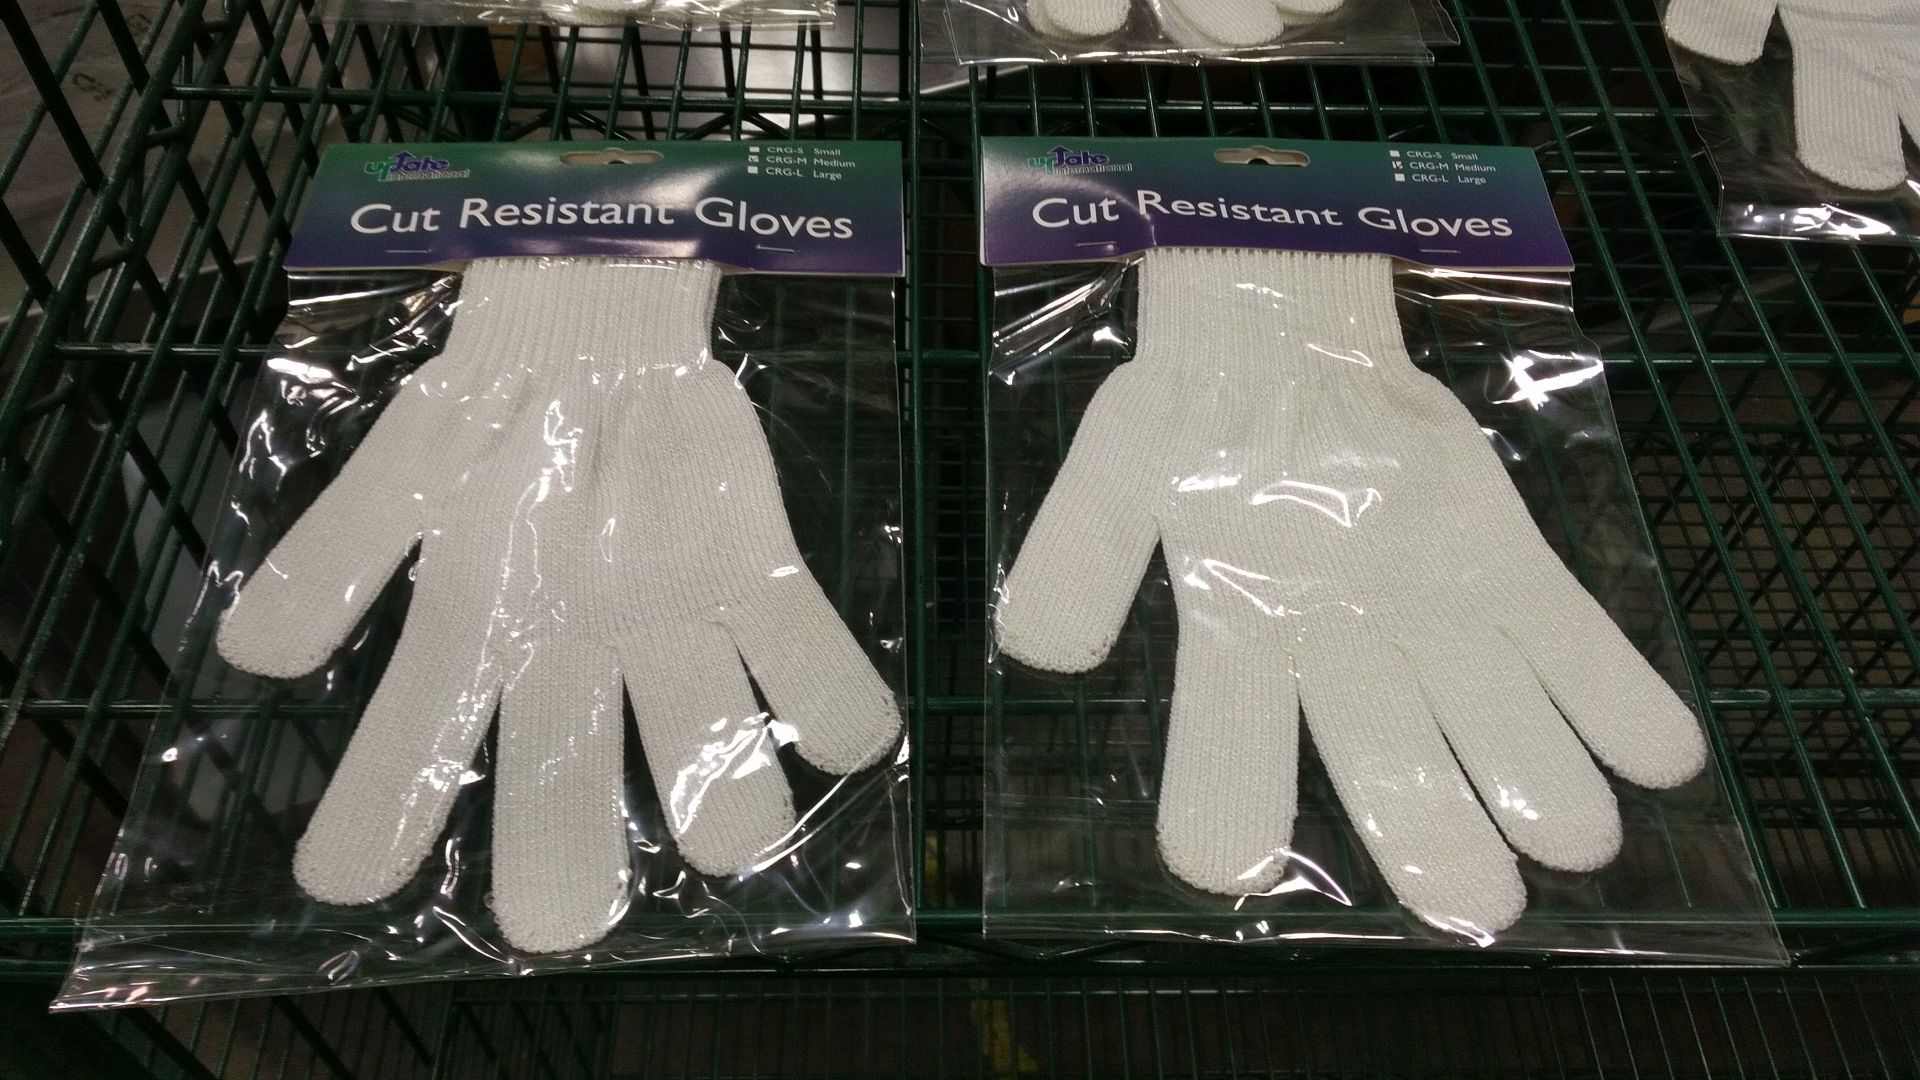 Medium (9.5") Cut-Resistant Gloves - Lot of 2